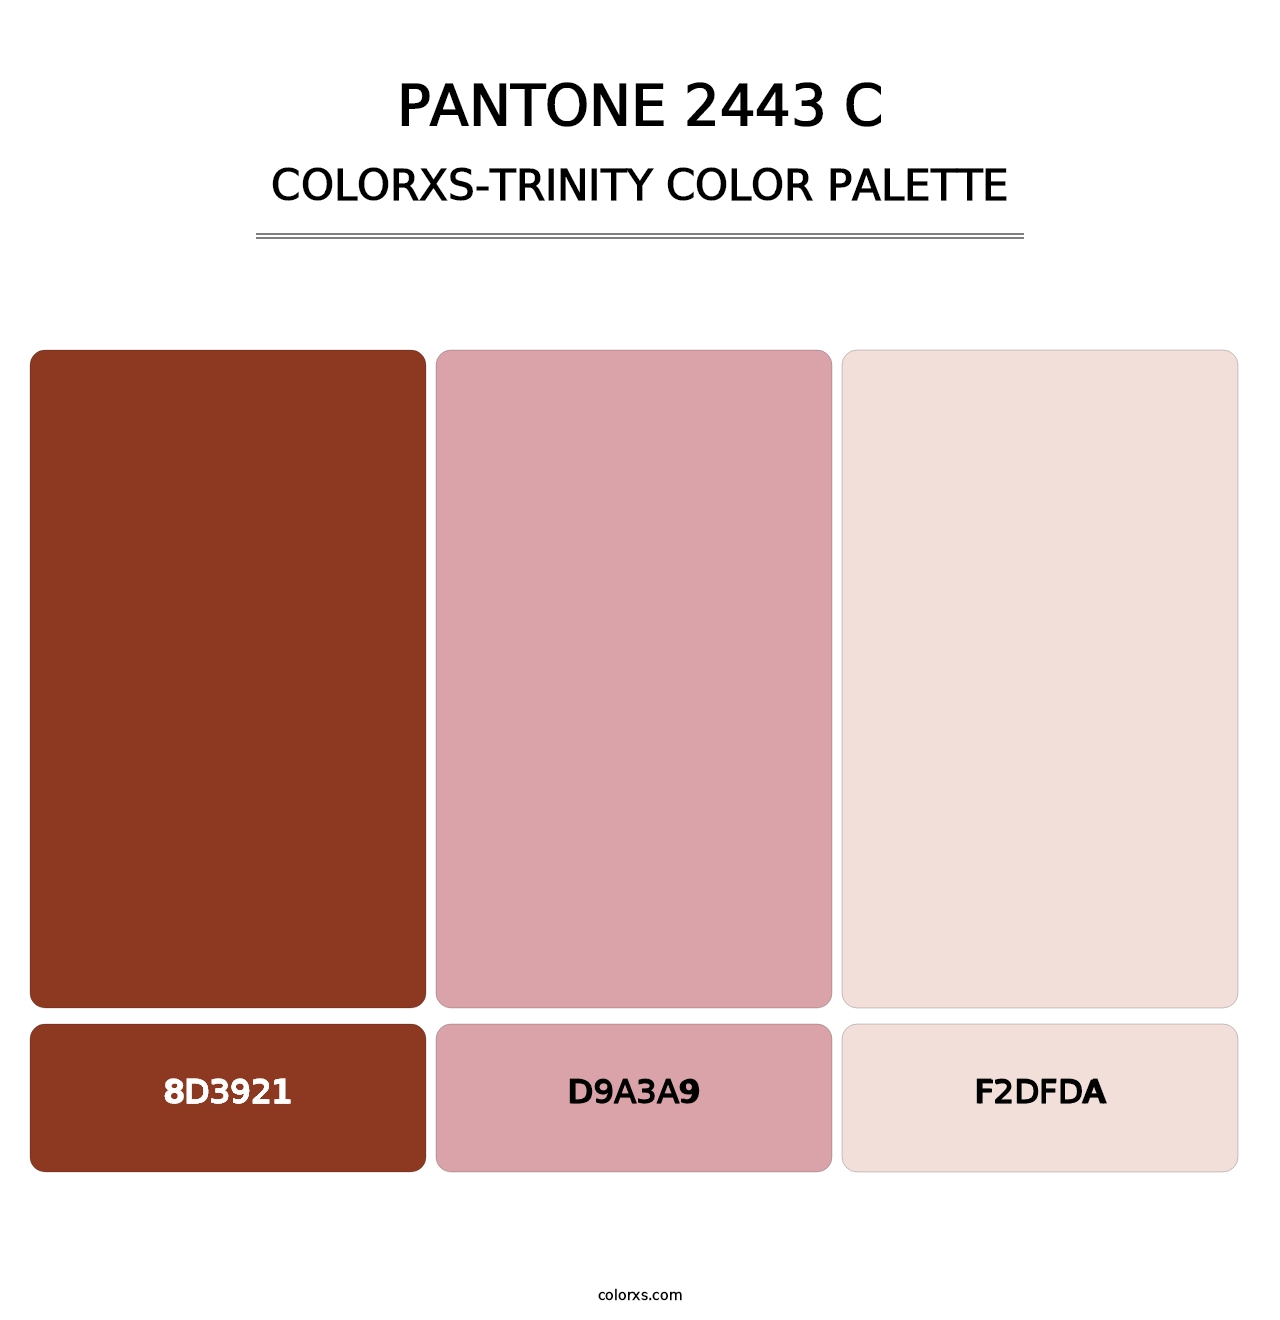 PANTONE 2443 C - Colorxs Trinity Palette